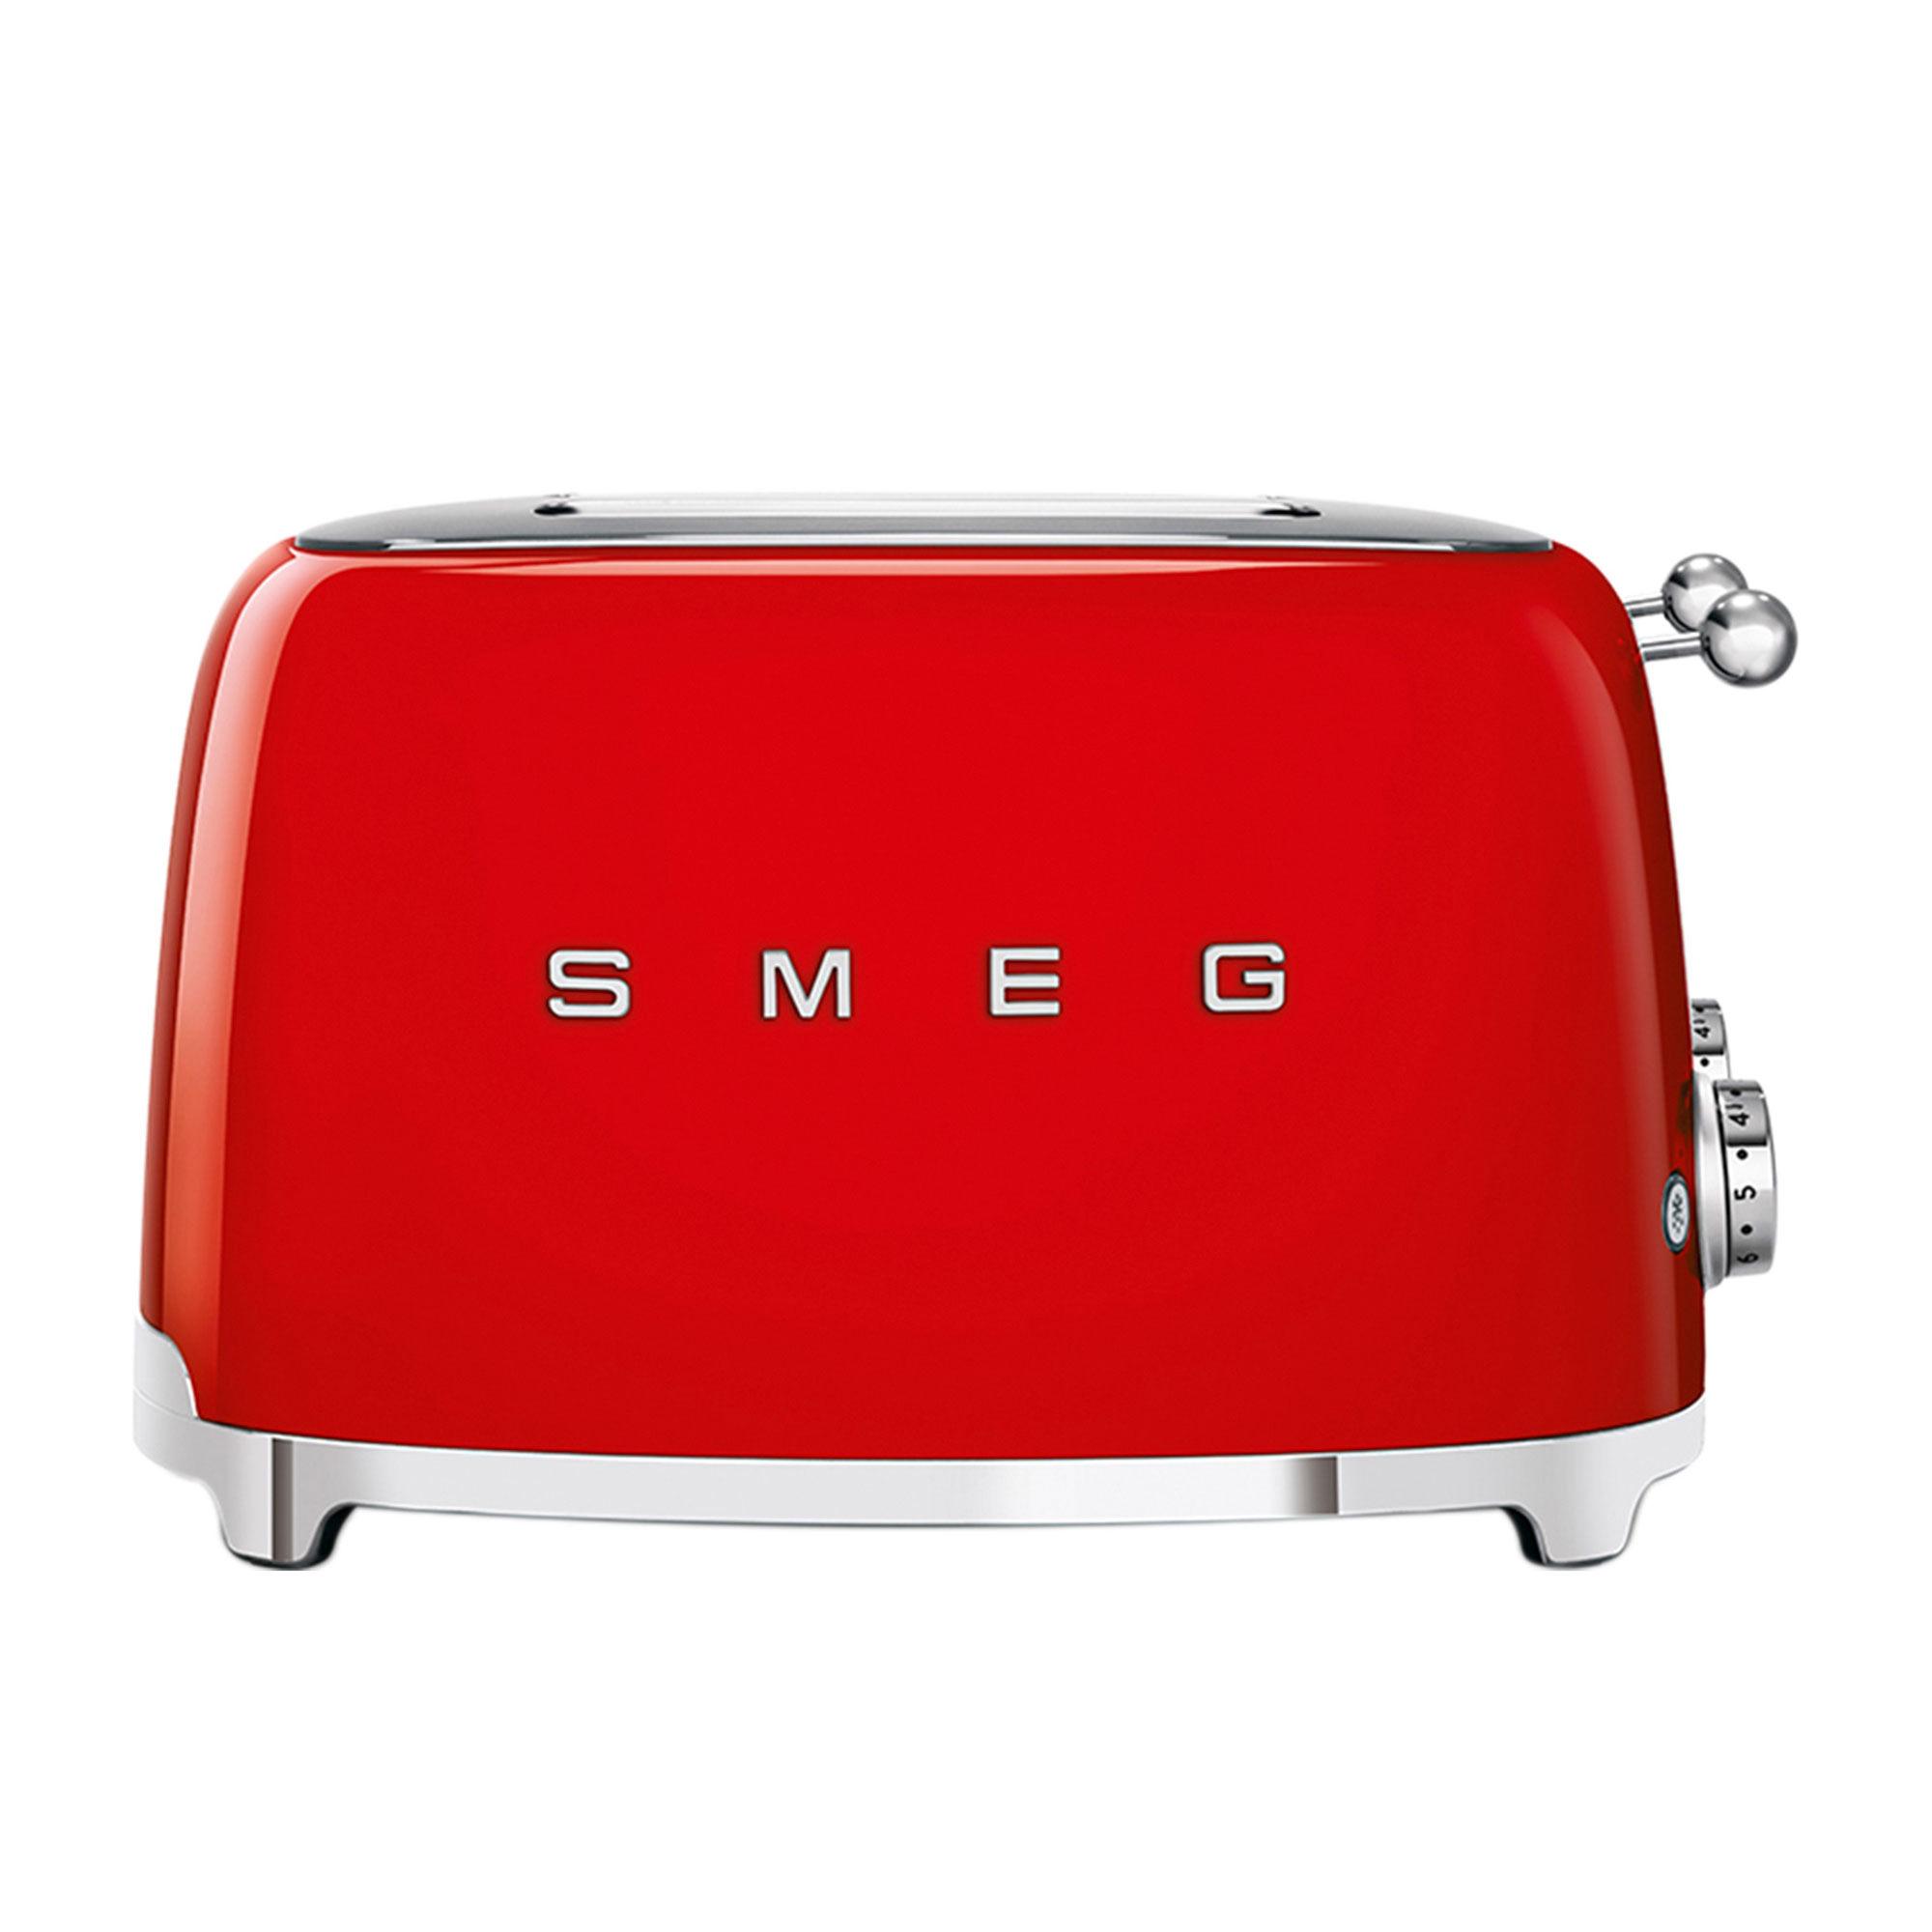 Smeg 50's Retro Style 4 Slot Toaster Red Image 5